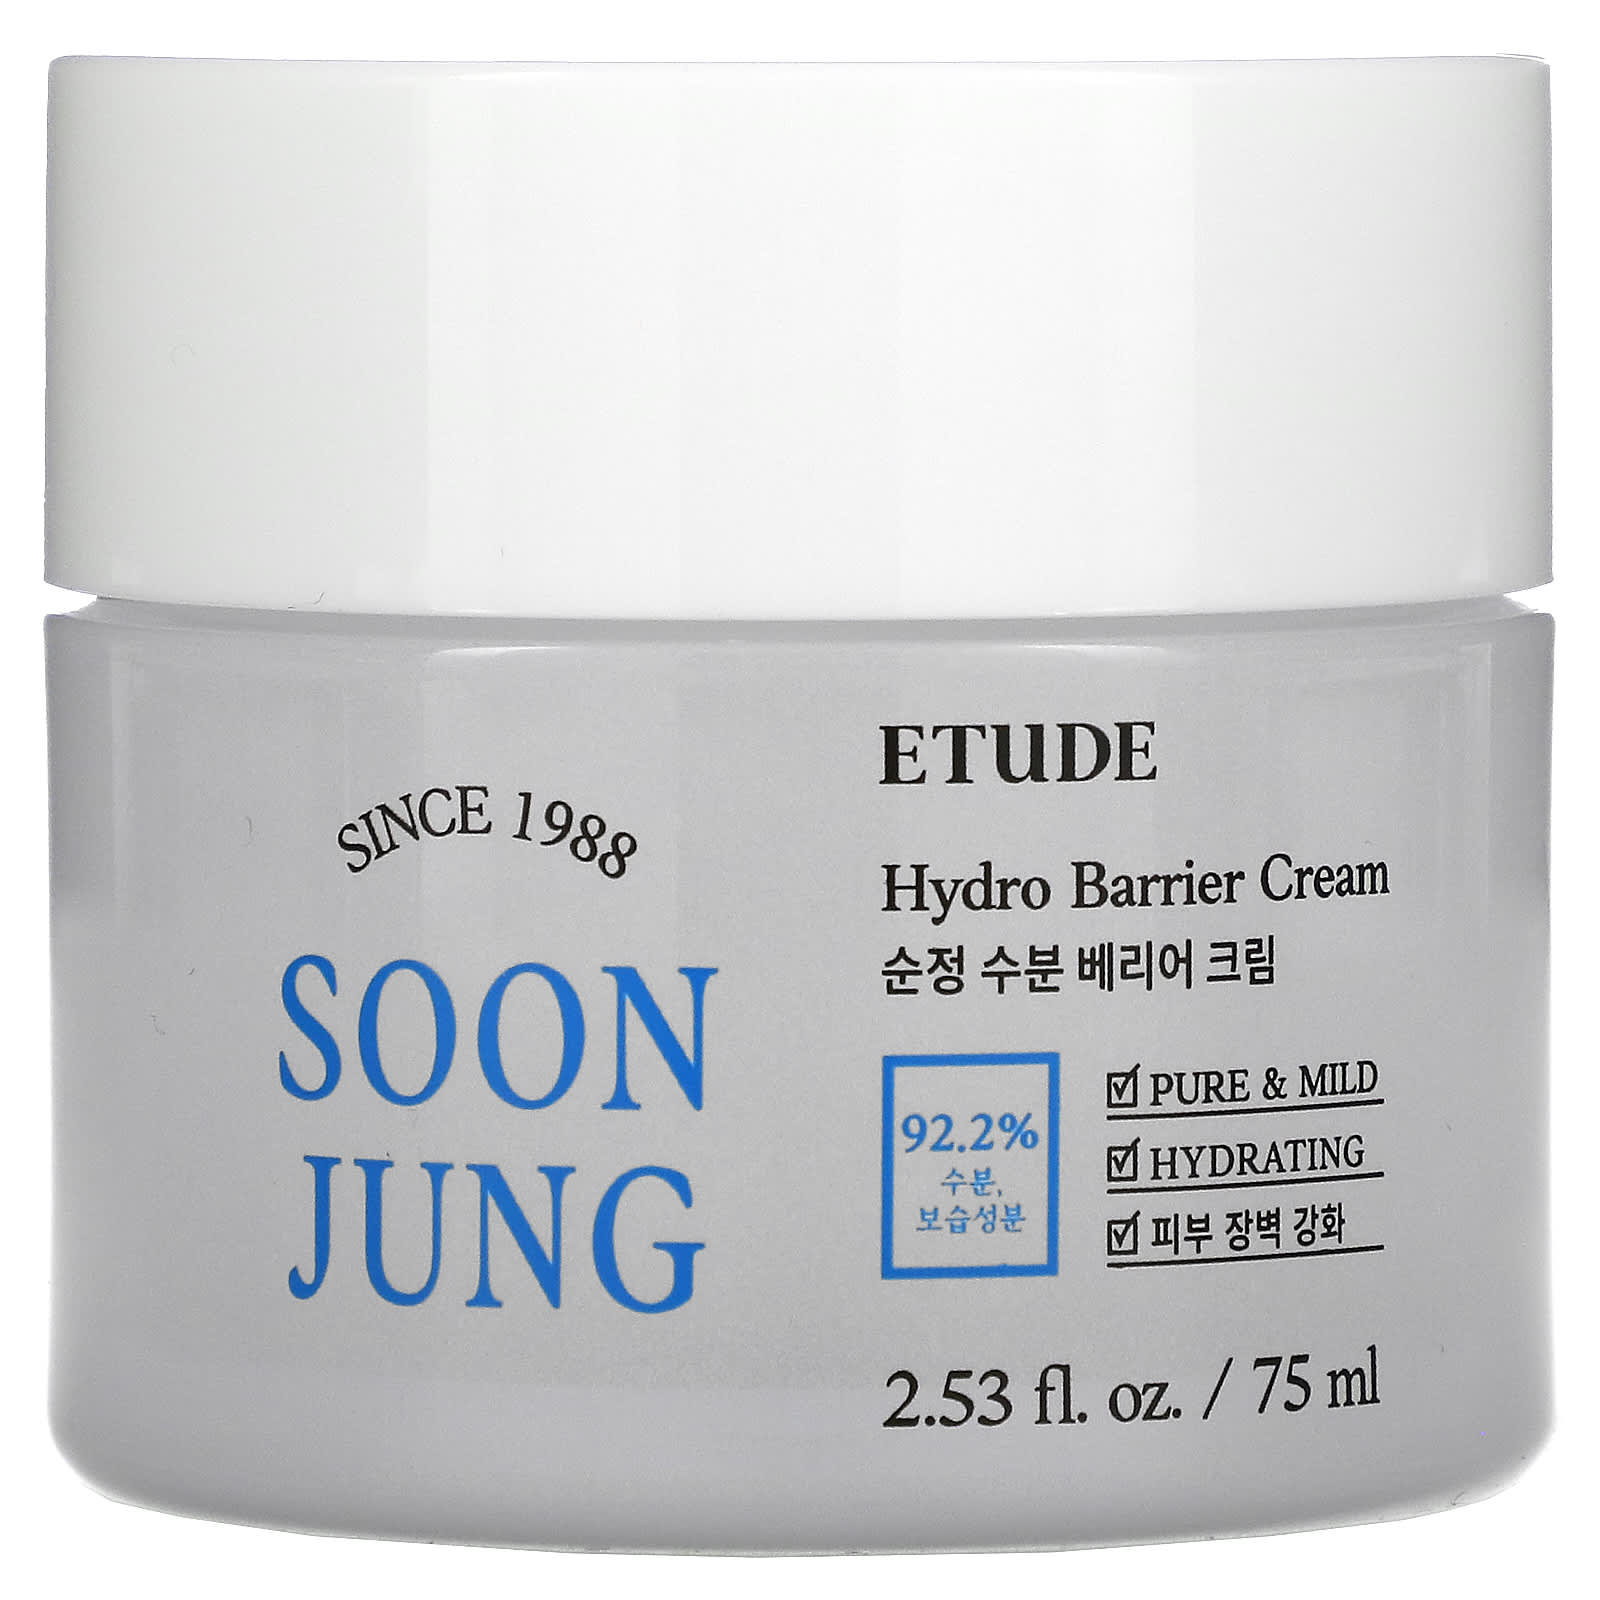 Etude, Soon Jung, Hydro Barrier Cream (75 ml)